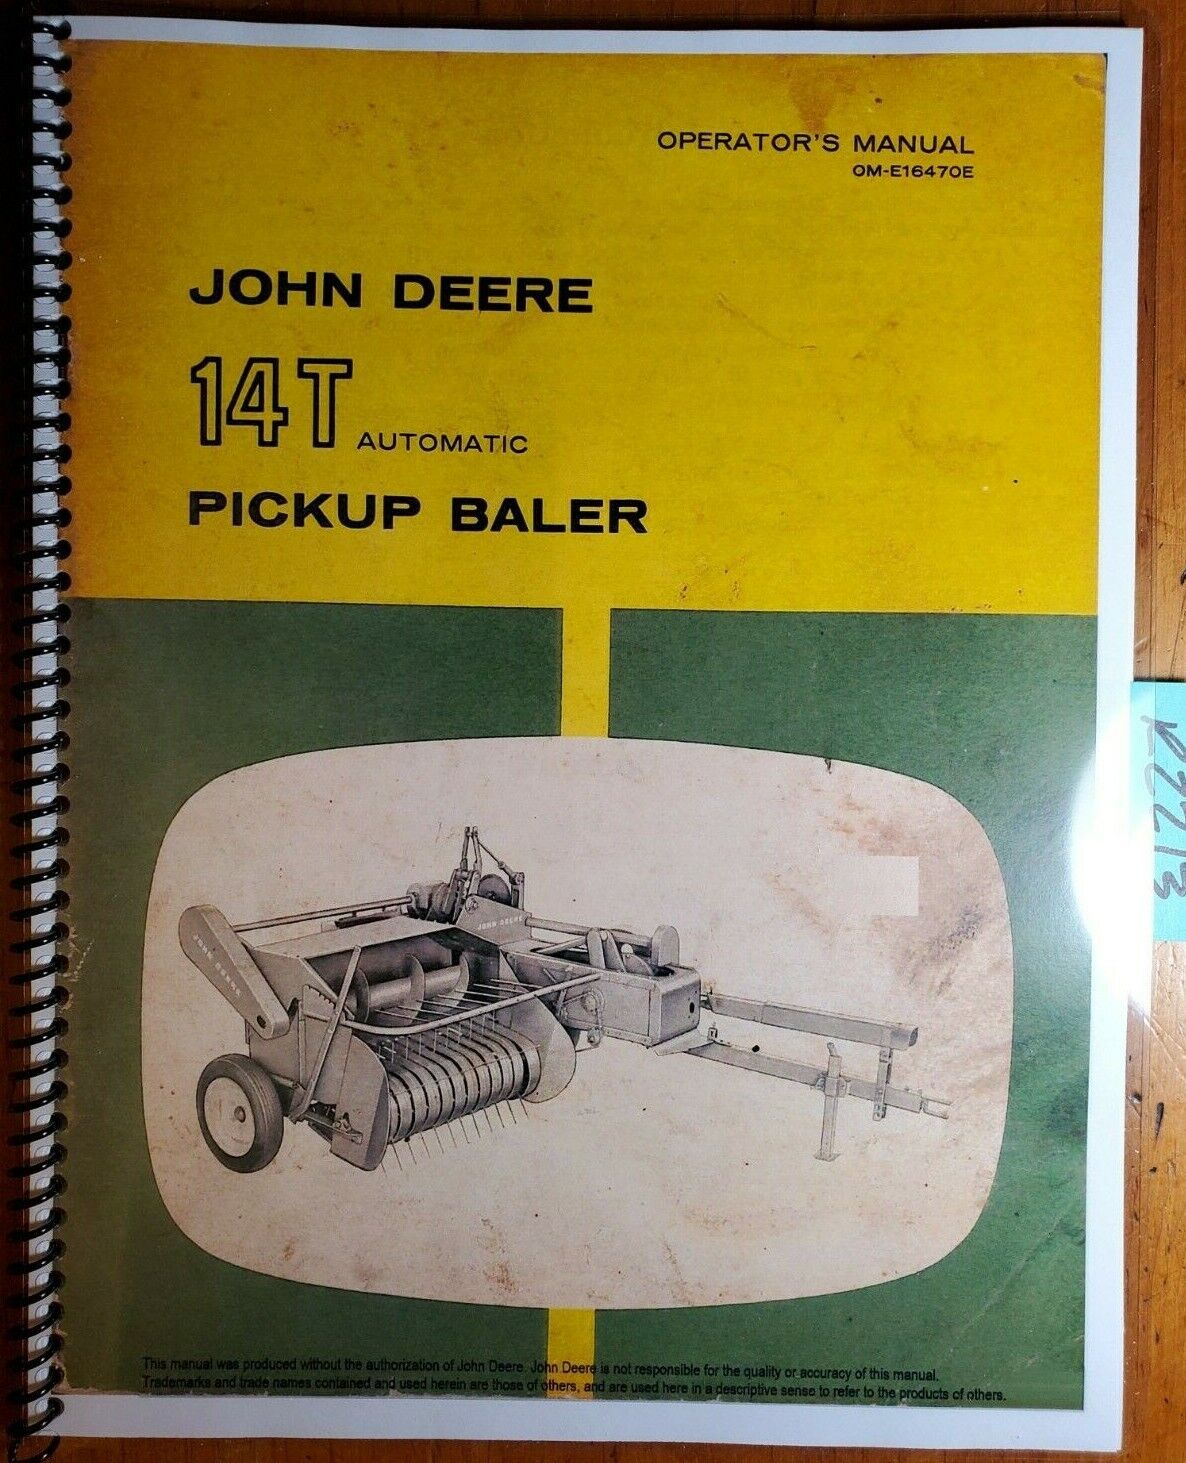 John Deere 14T Automatic Pickup Baler Operators Manual OM-E16470E John Deere